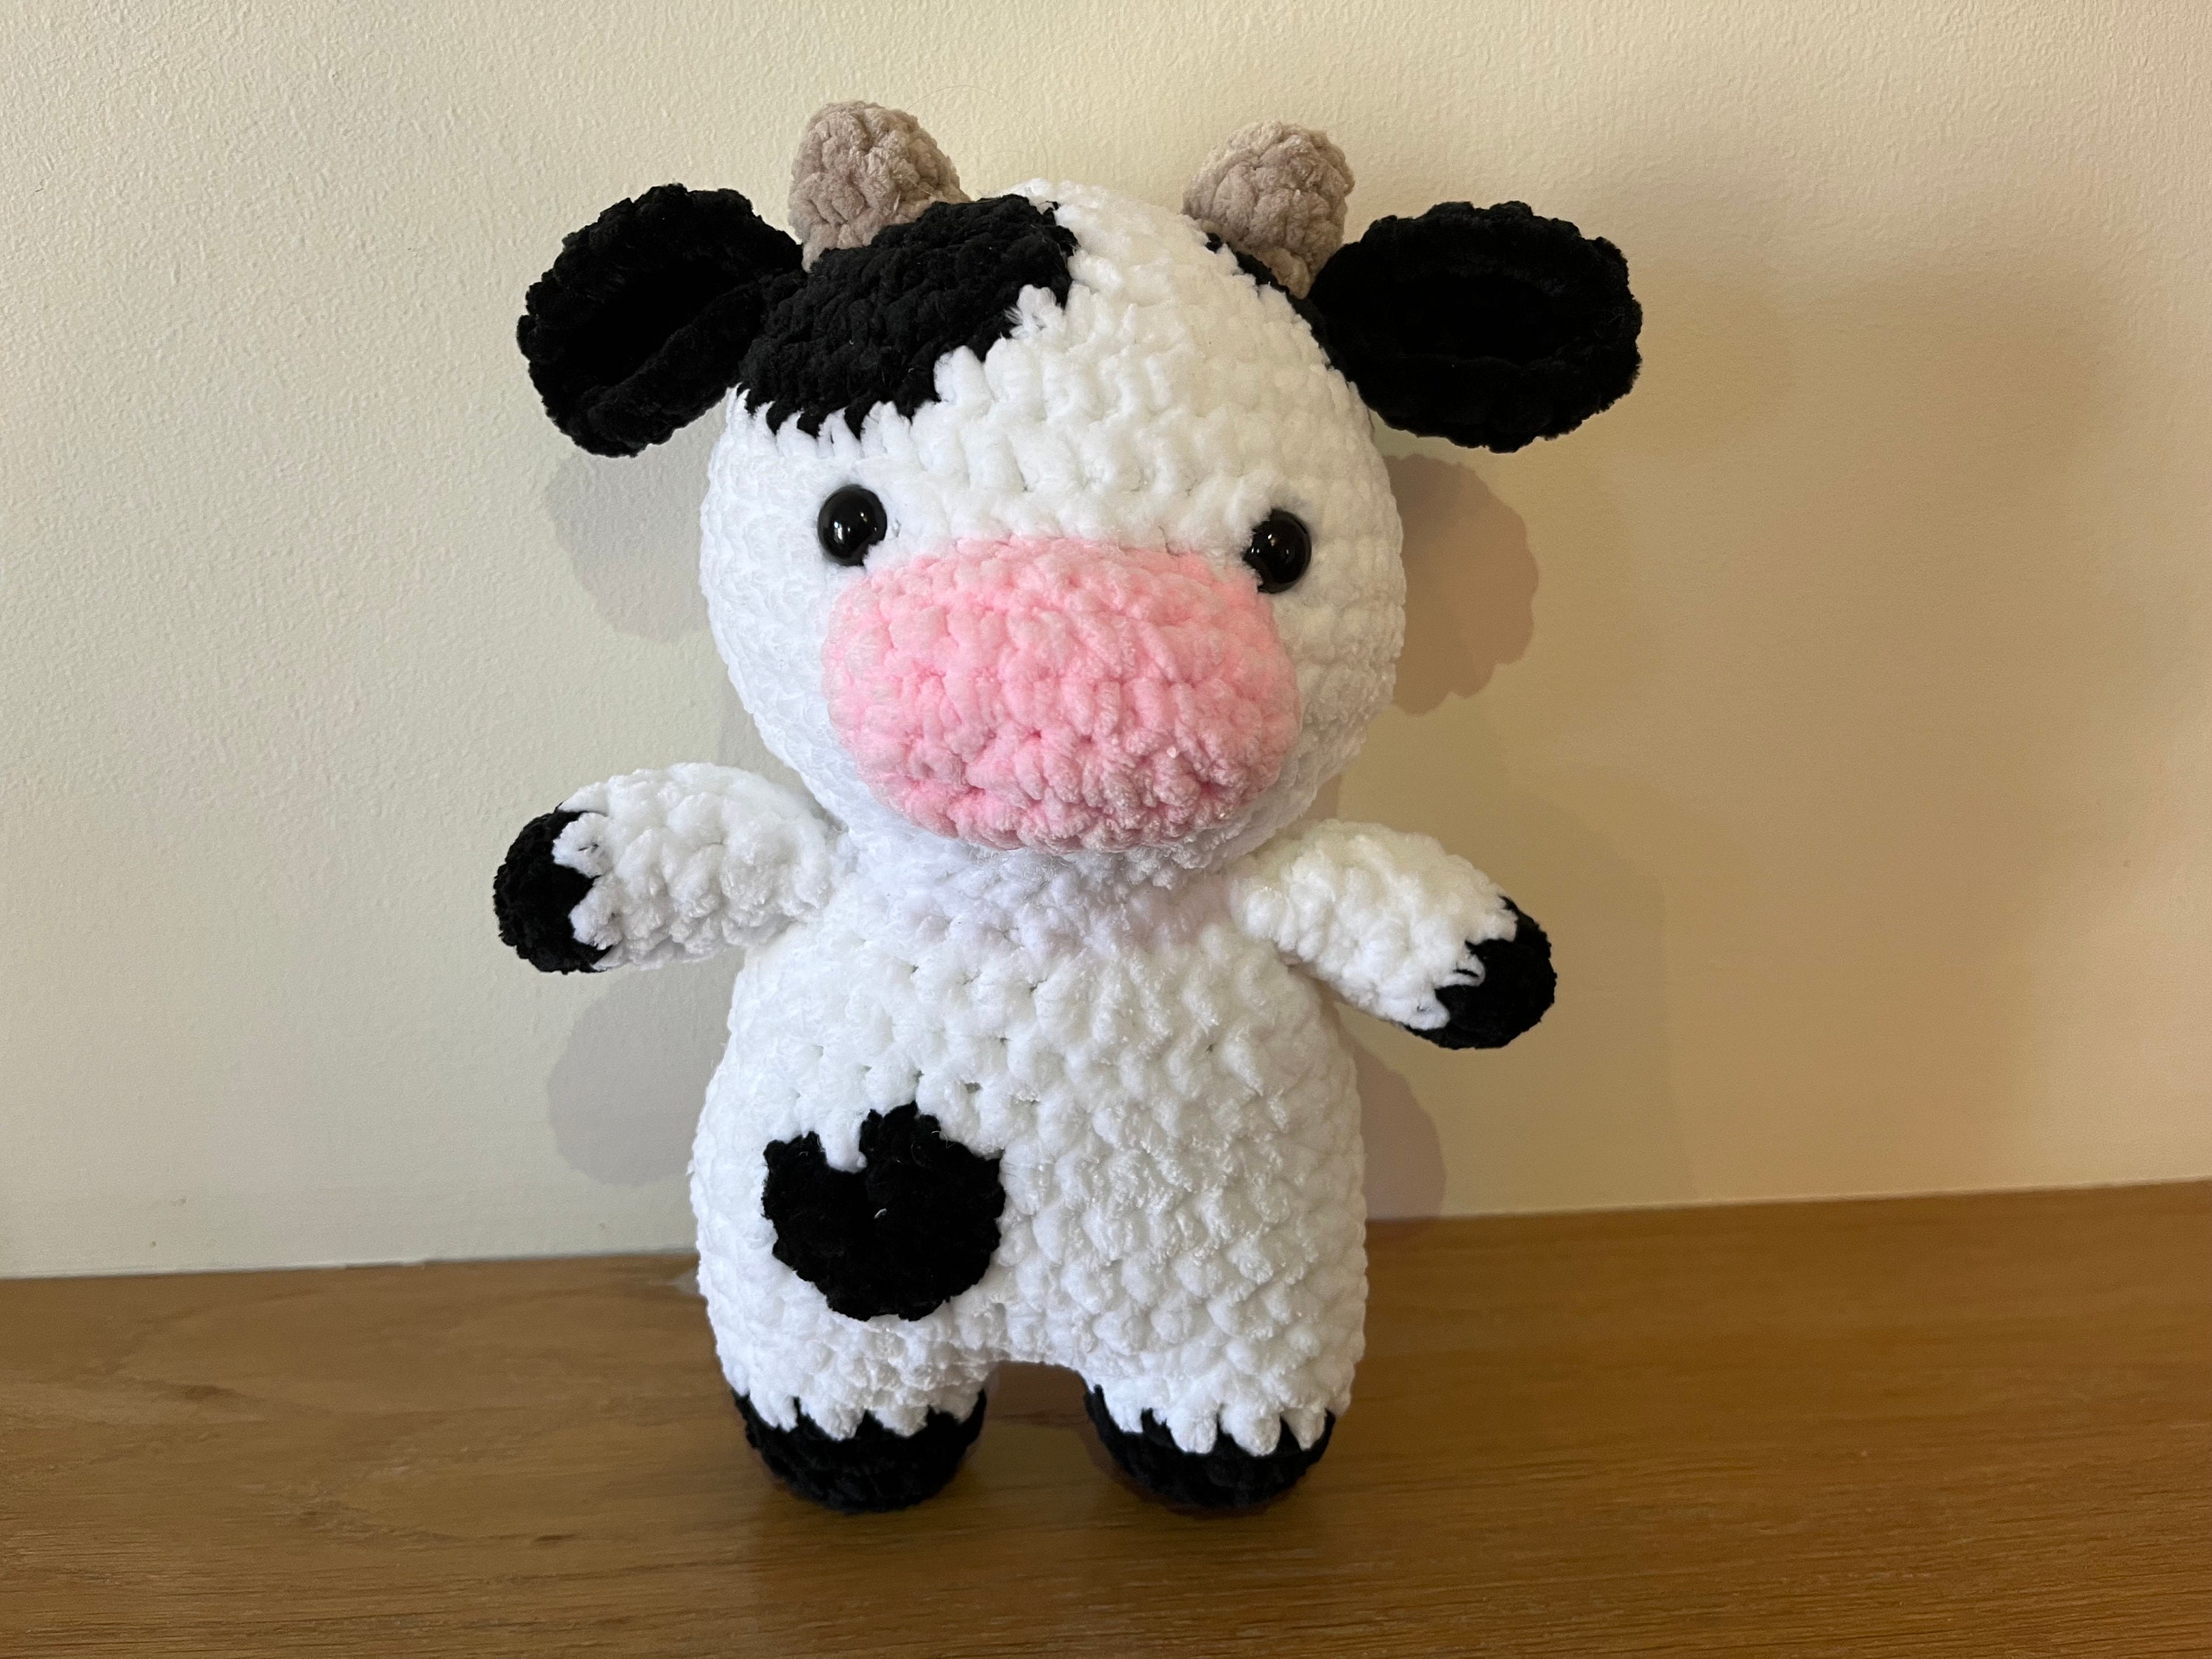 TOFT Morag The Highland Cow Crochet Kit